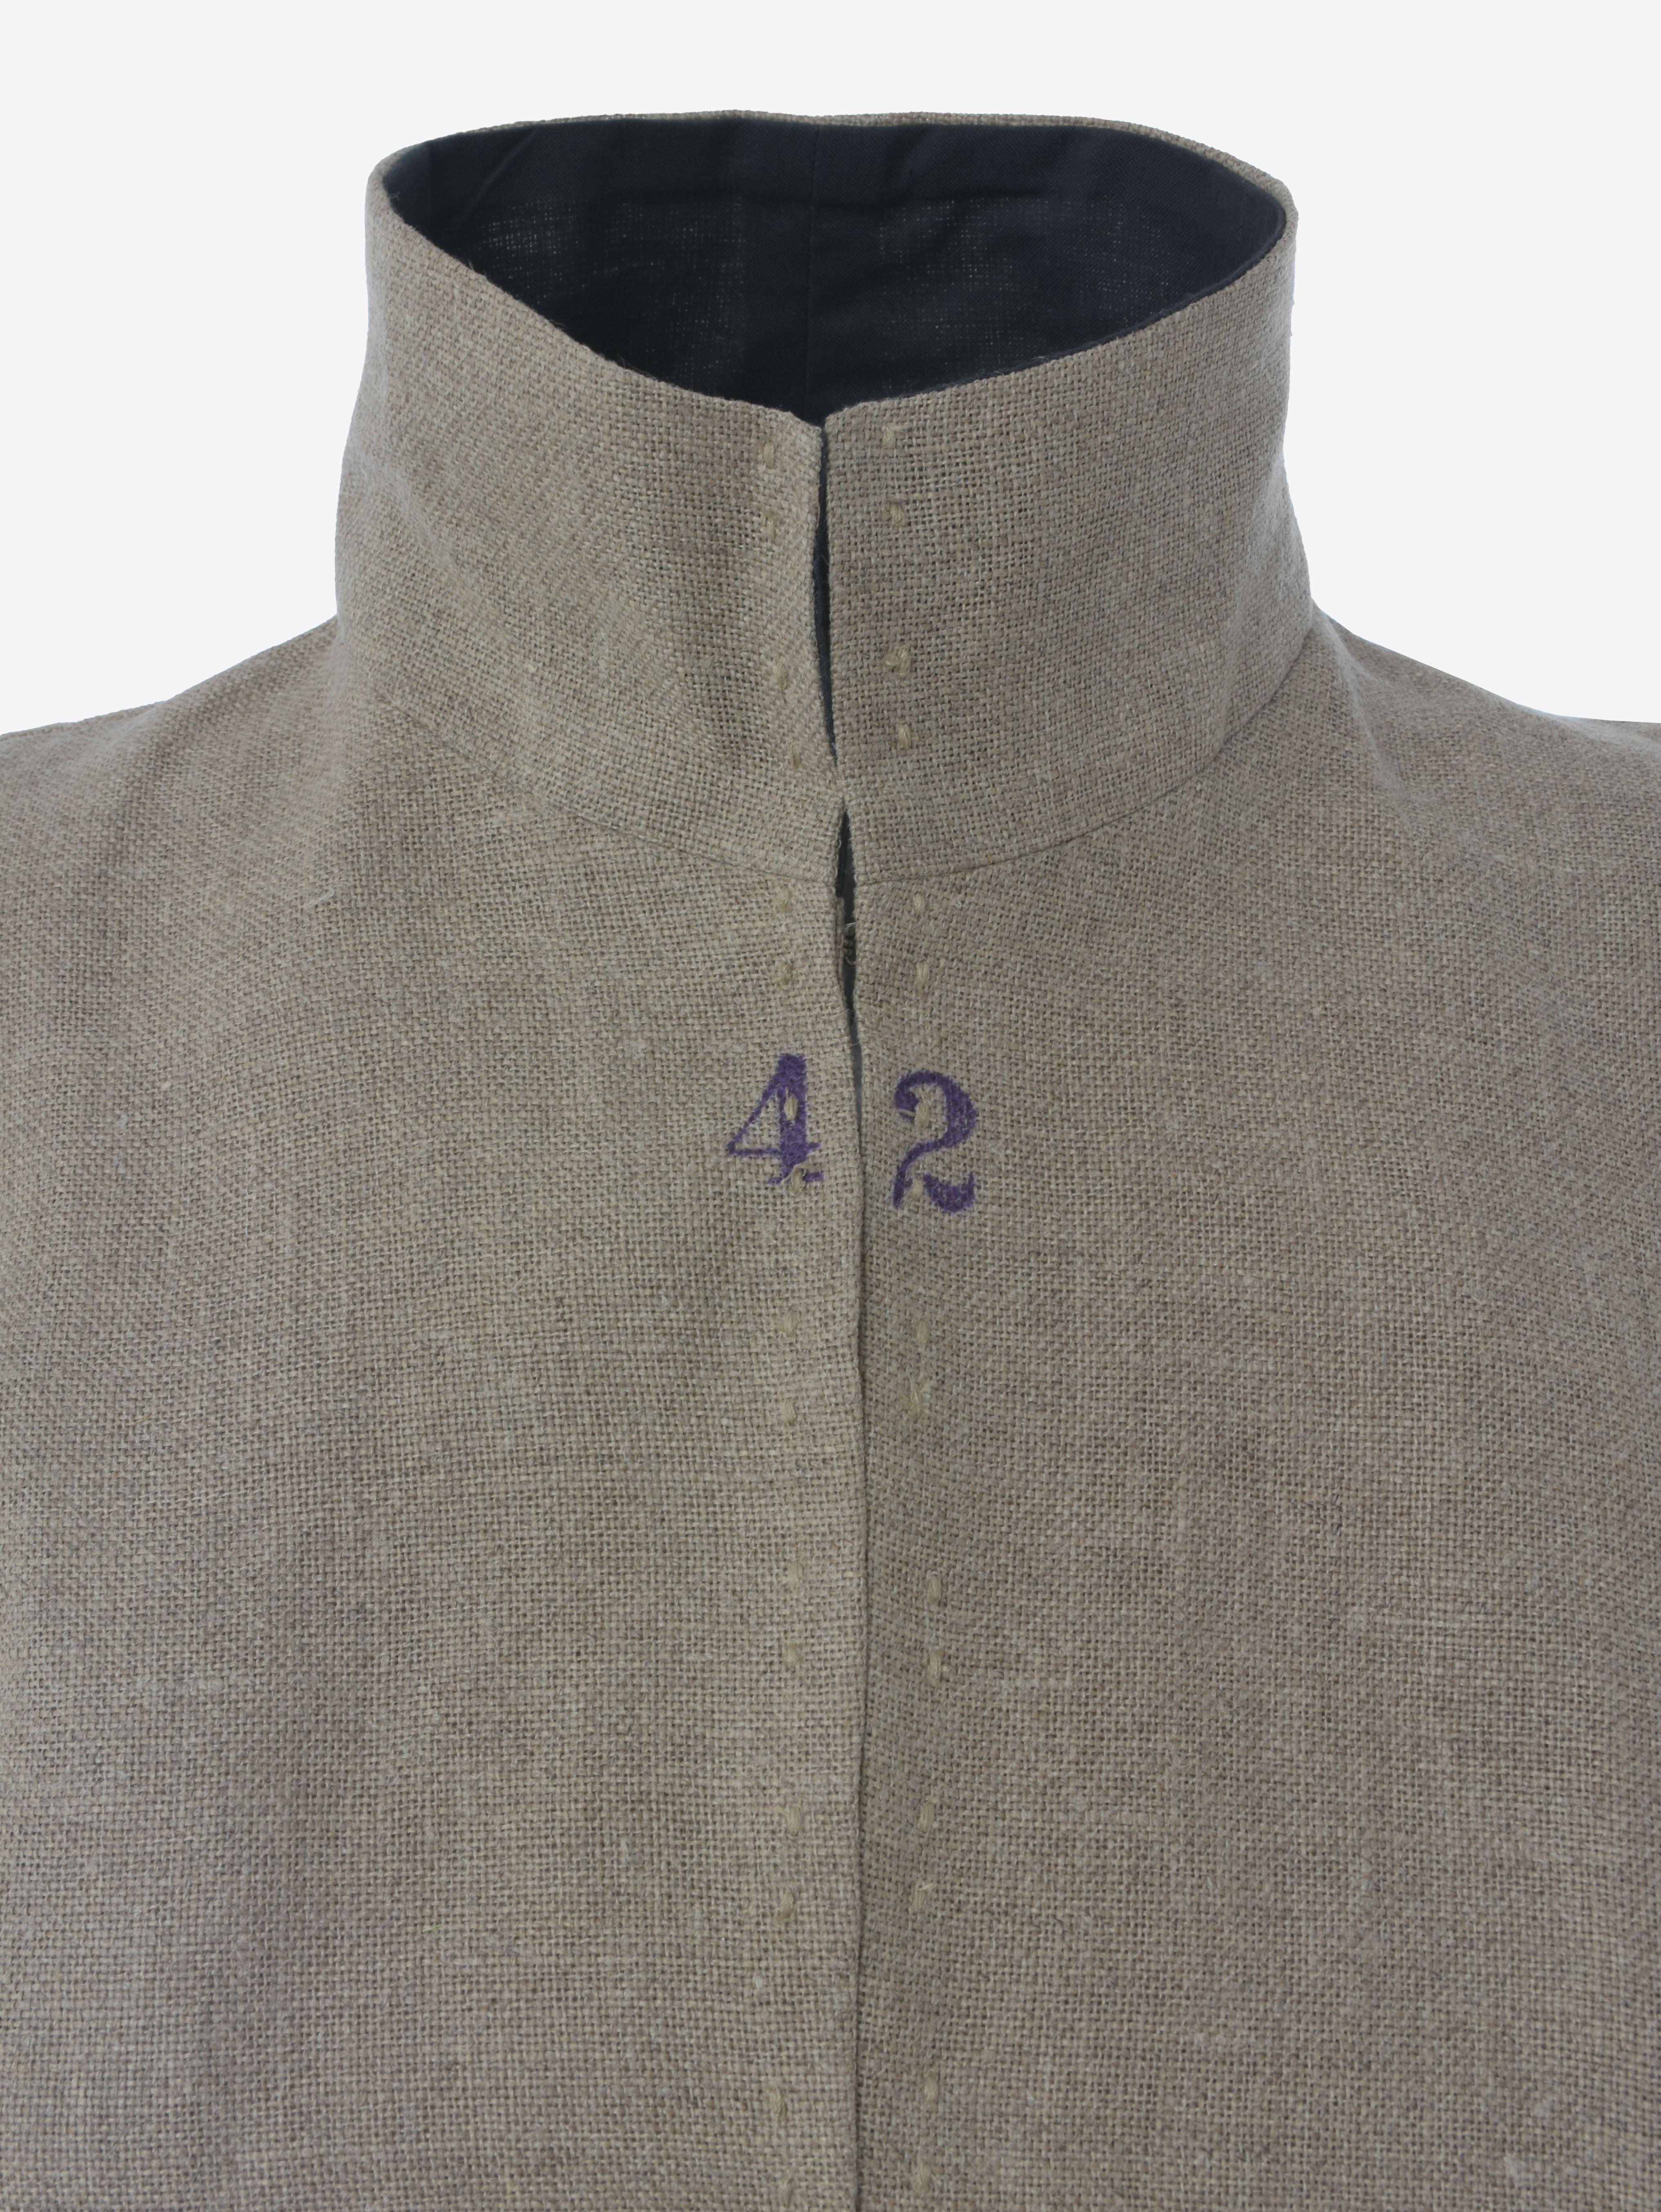 Maison Margiela Semi Couture Dressmaker Bodice - '97 For Sale 1